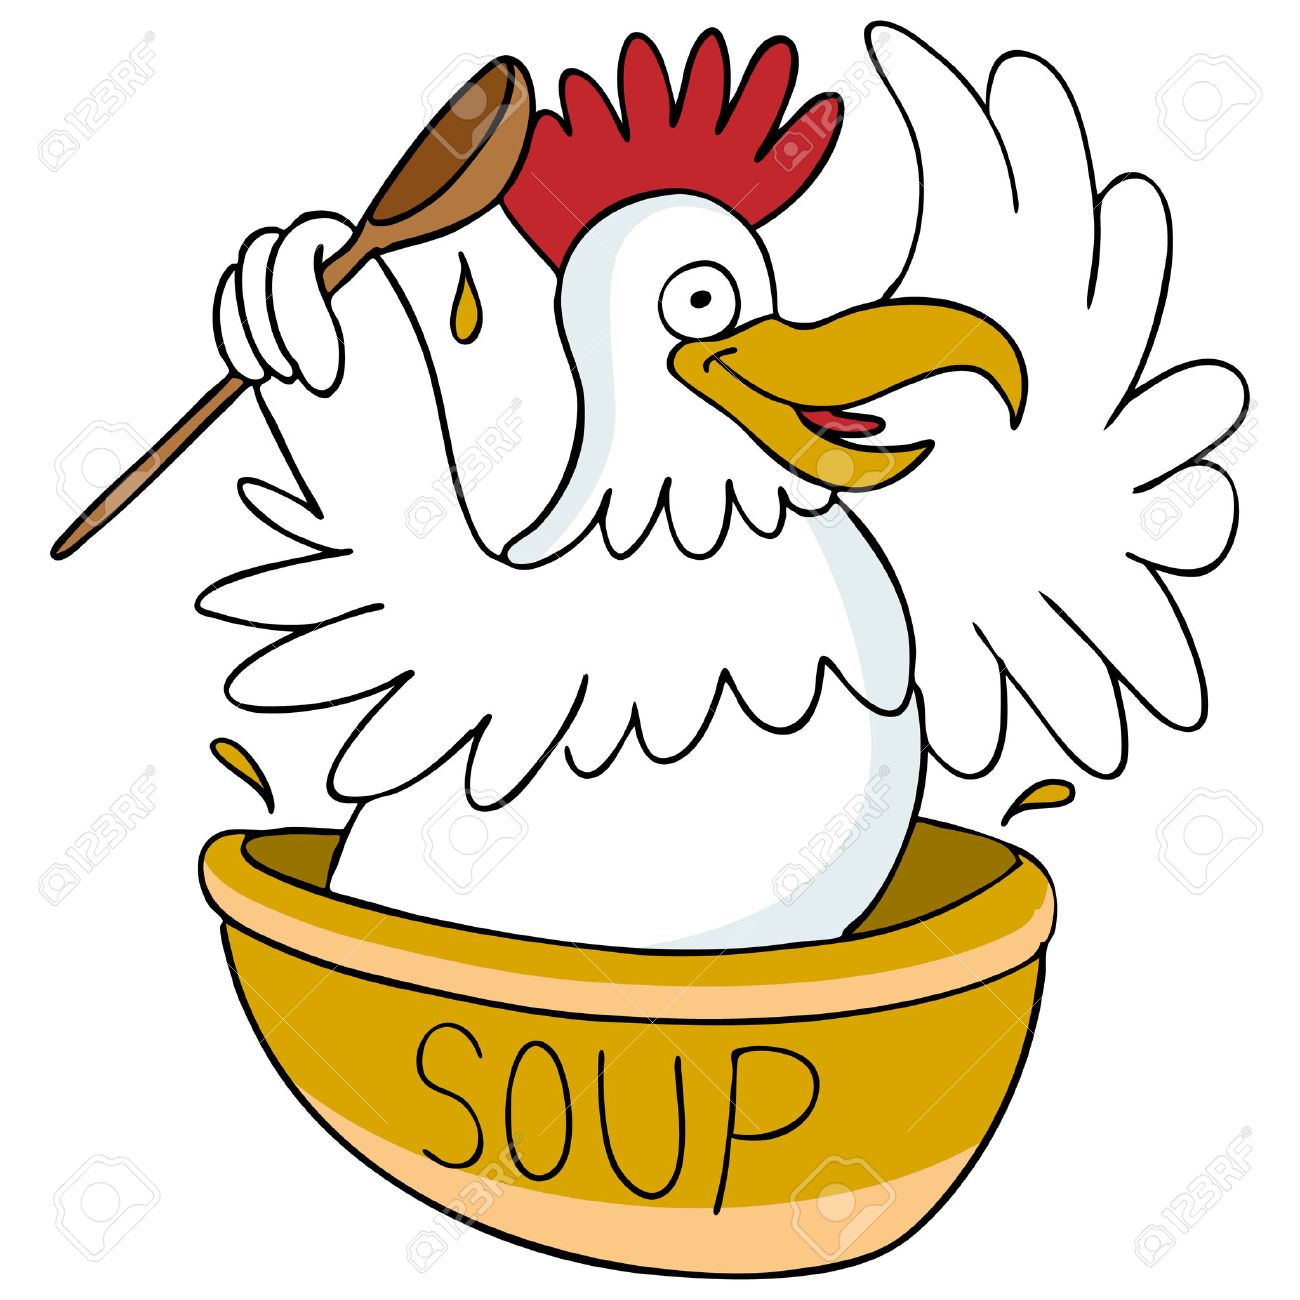 7852353-An-image-representing-chicken-soup--Stock-Vector-cartoon.jpg